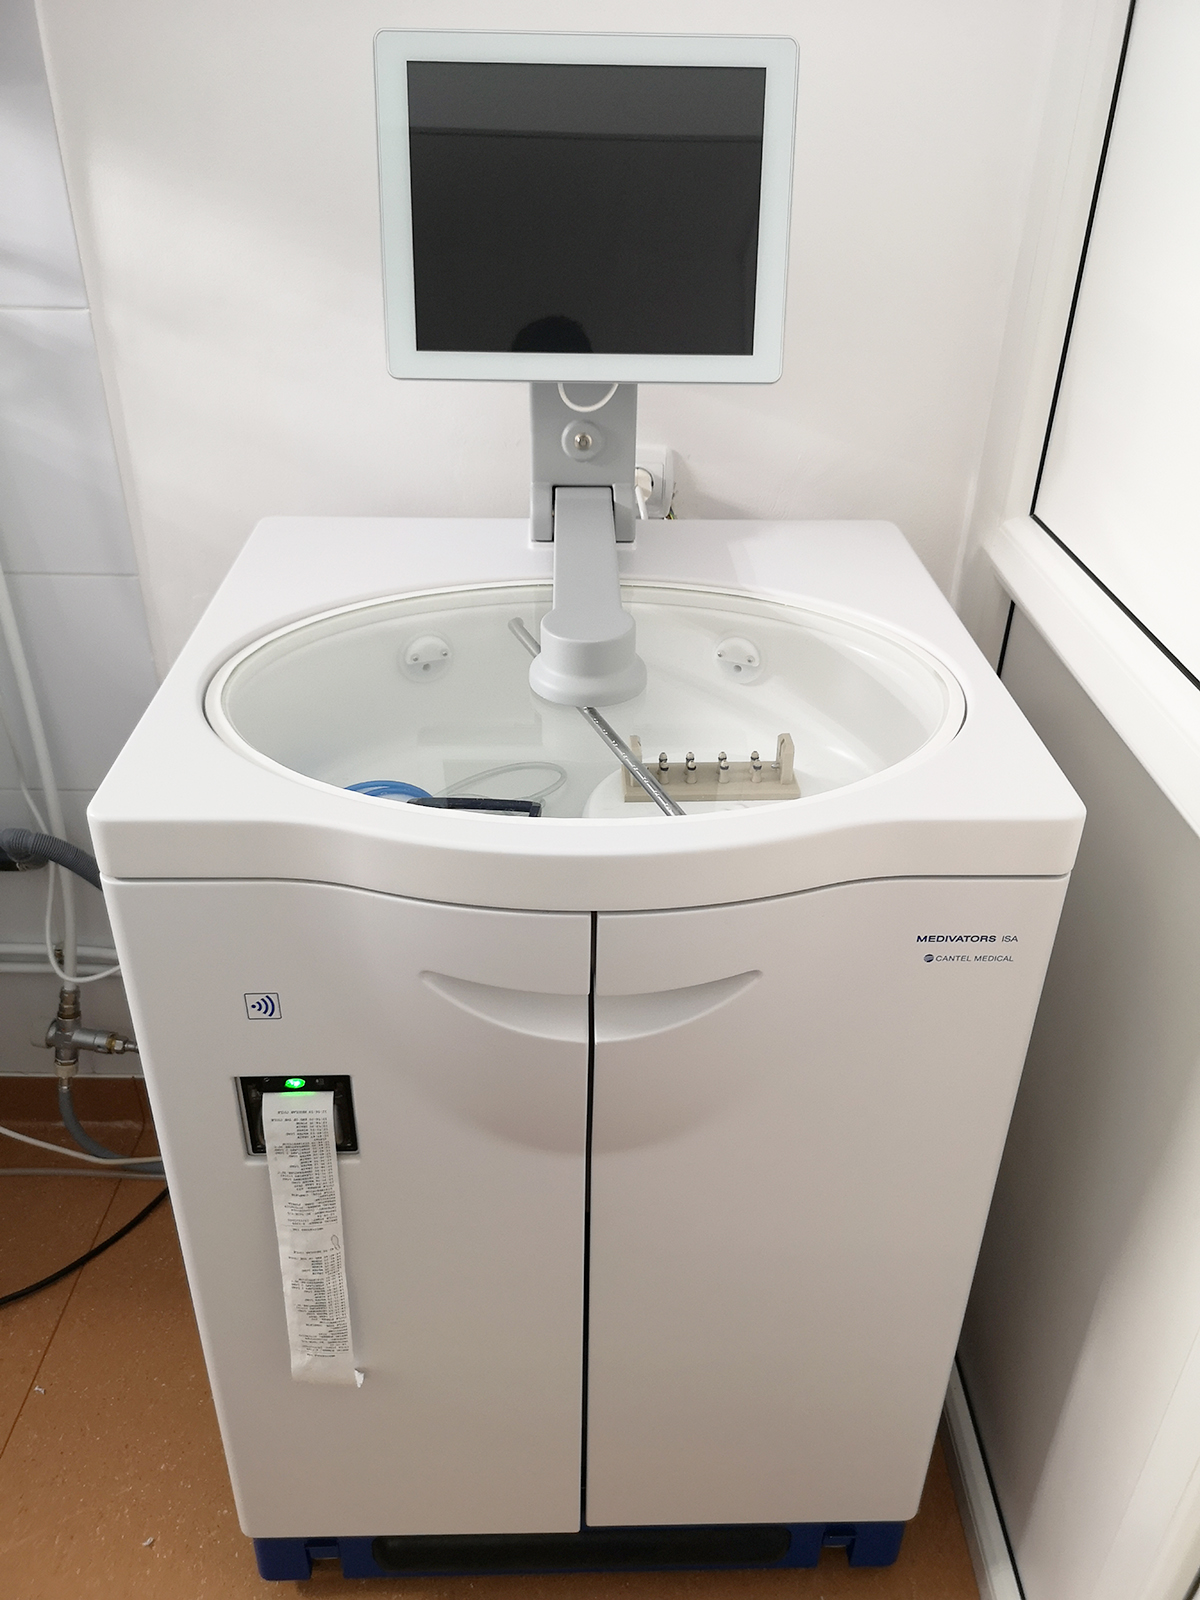 Masina de spalat automata pentru endoscoape Medivators ISA Cantel Medical